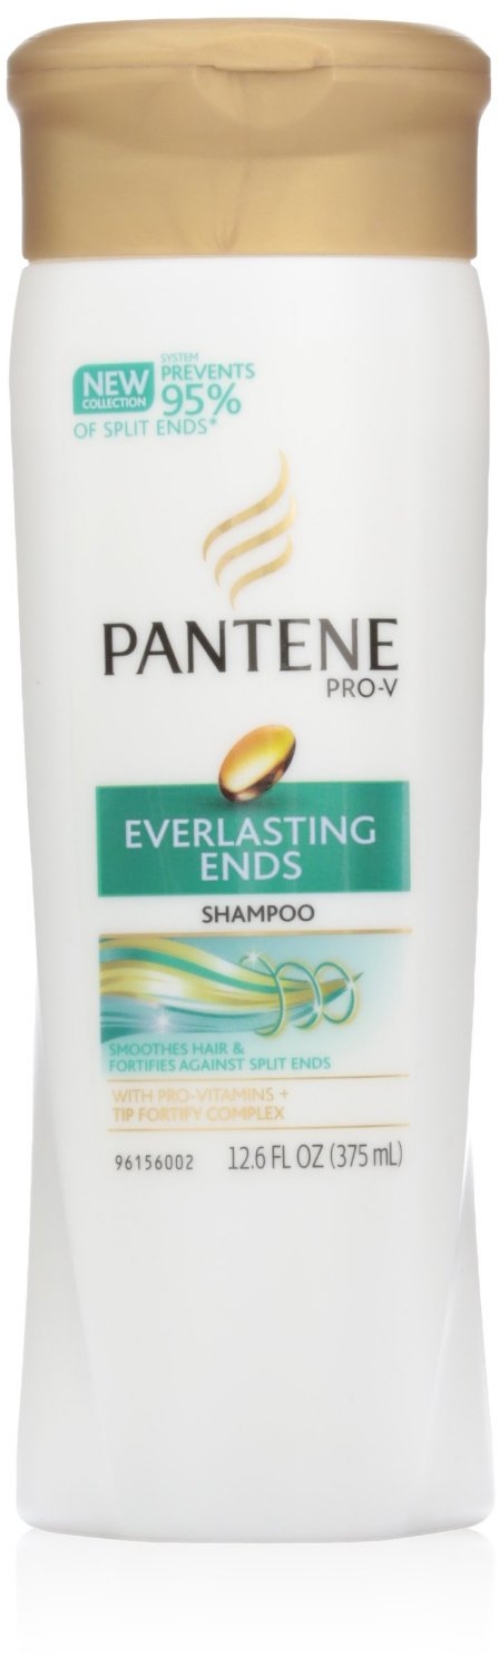 Pantene Pro-V Everlasting Ends Shampoo, 12.6 fl oz